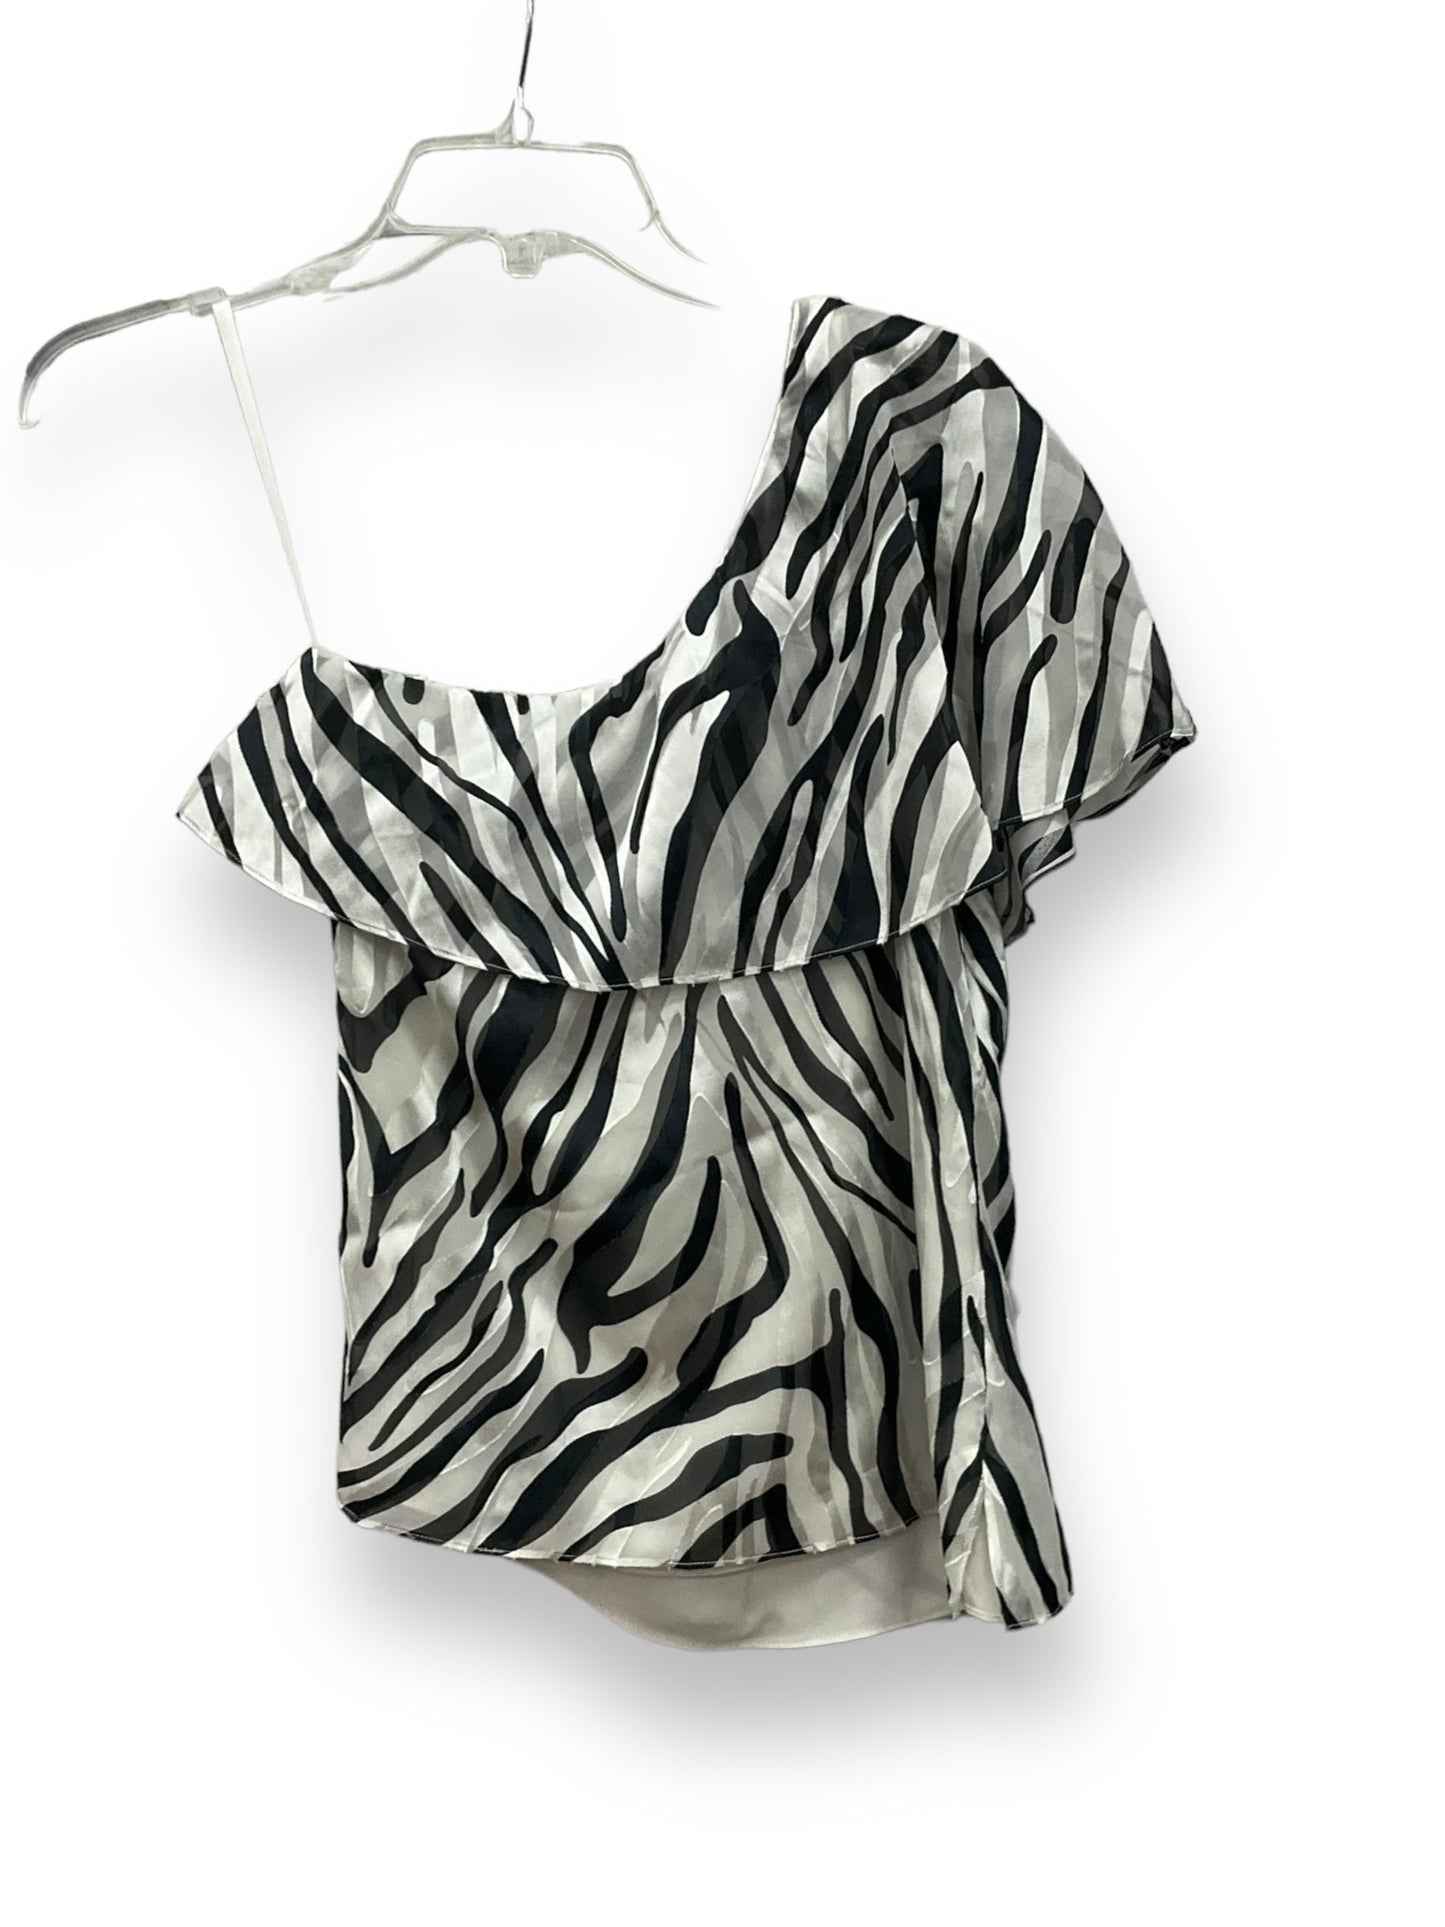 Zebra Print Blouse Sleeveless White House Black Market, Size Xs